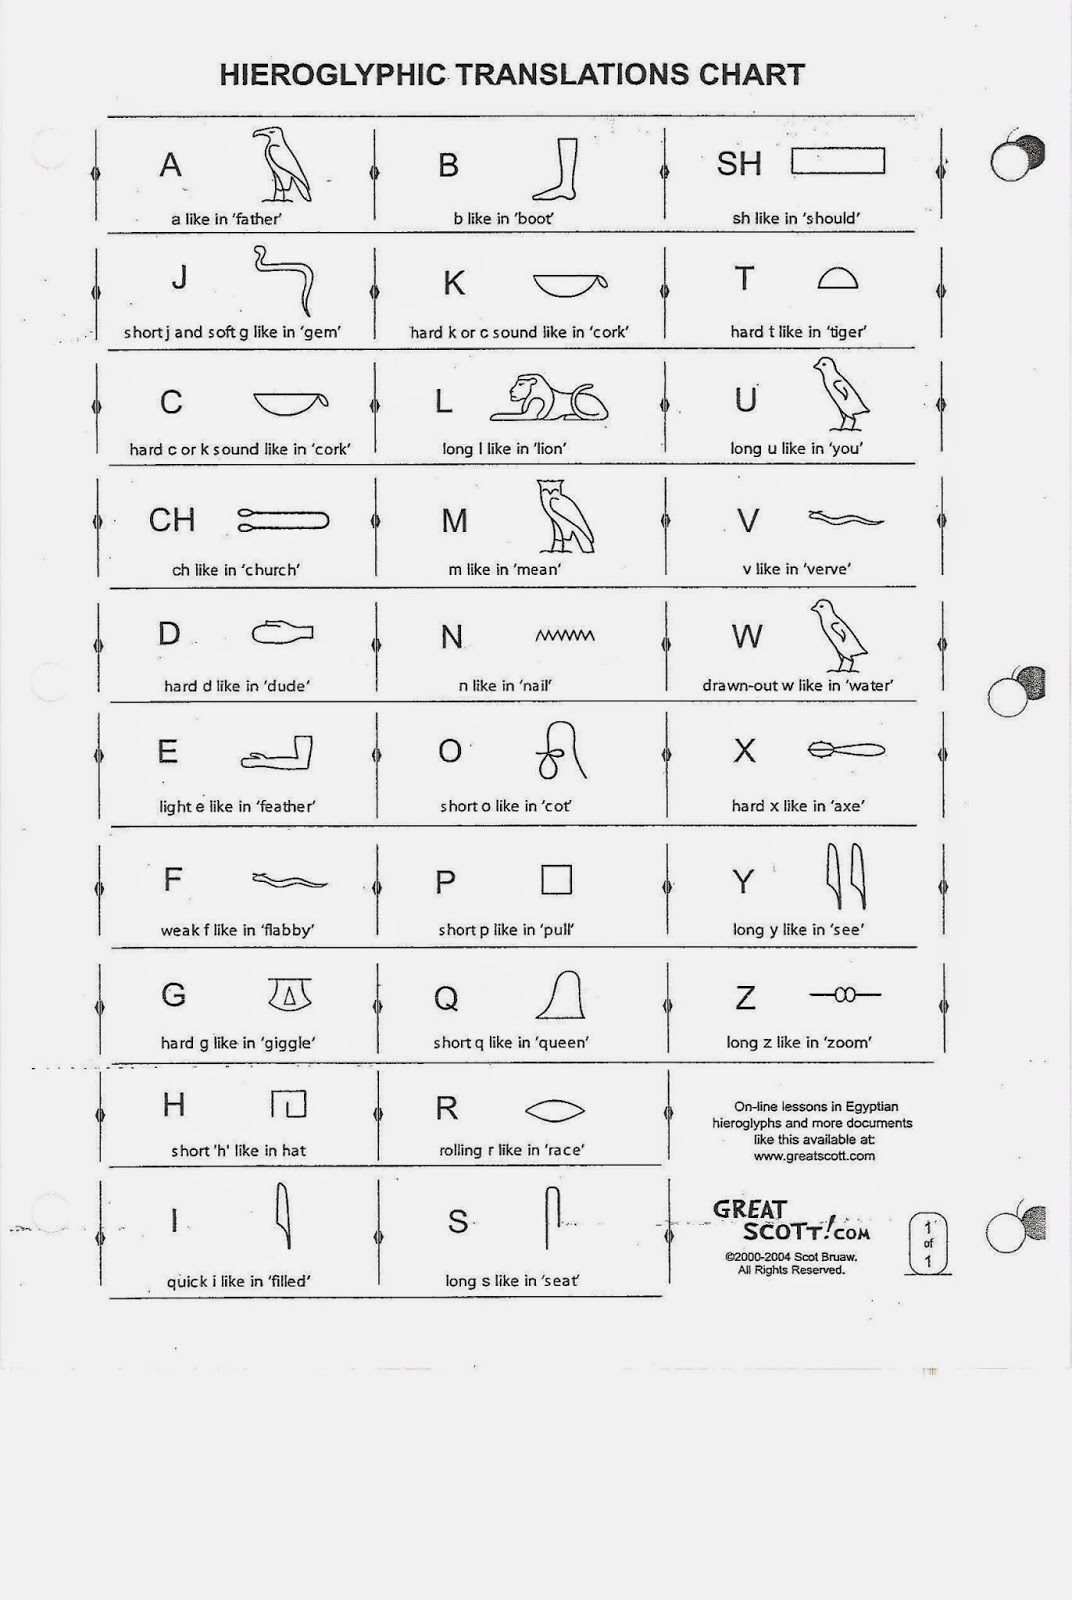 ancient-egyptian-hieroglyphics-chart